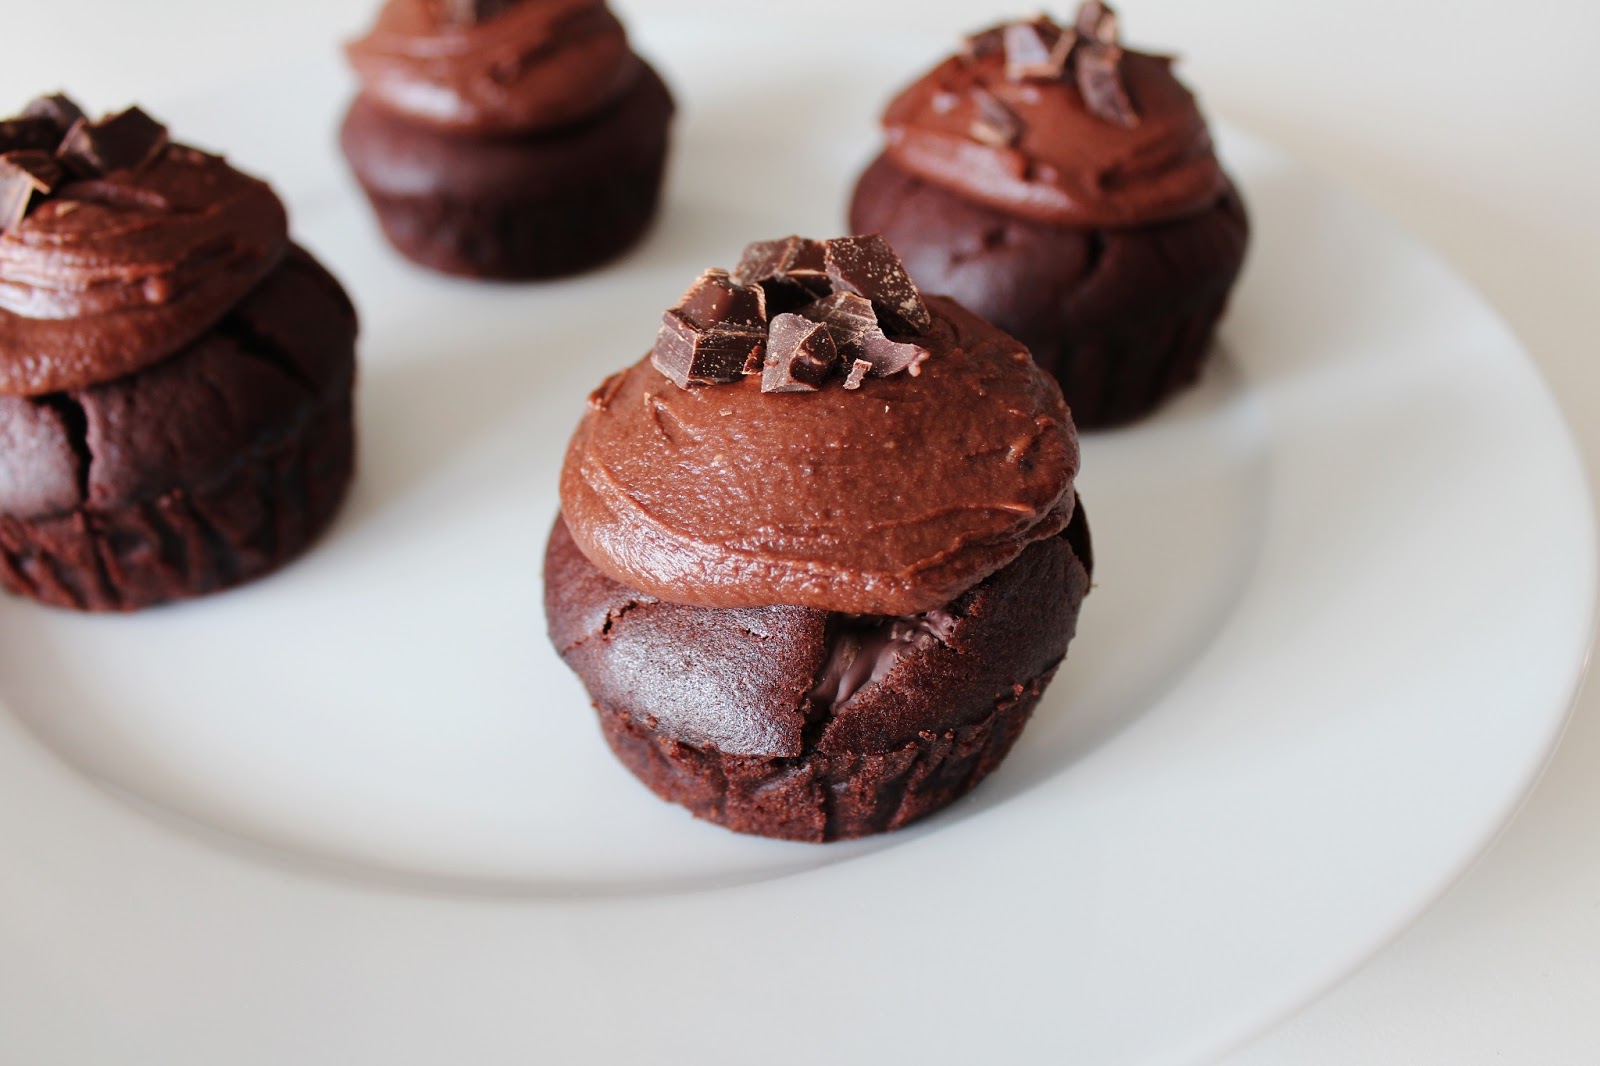 Chokolade Muffins med Smørcreme – Svampede Chokolade Muffins